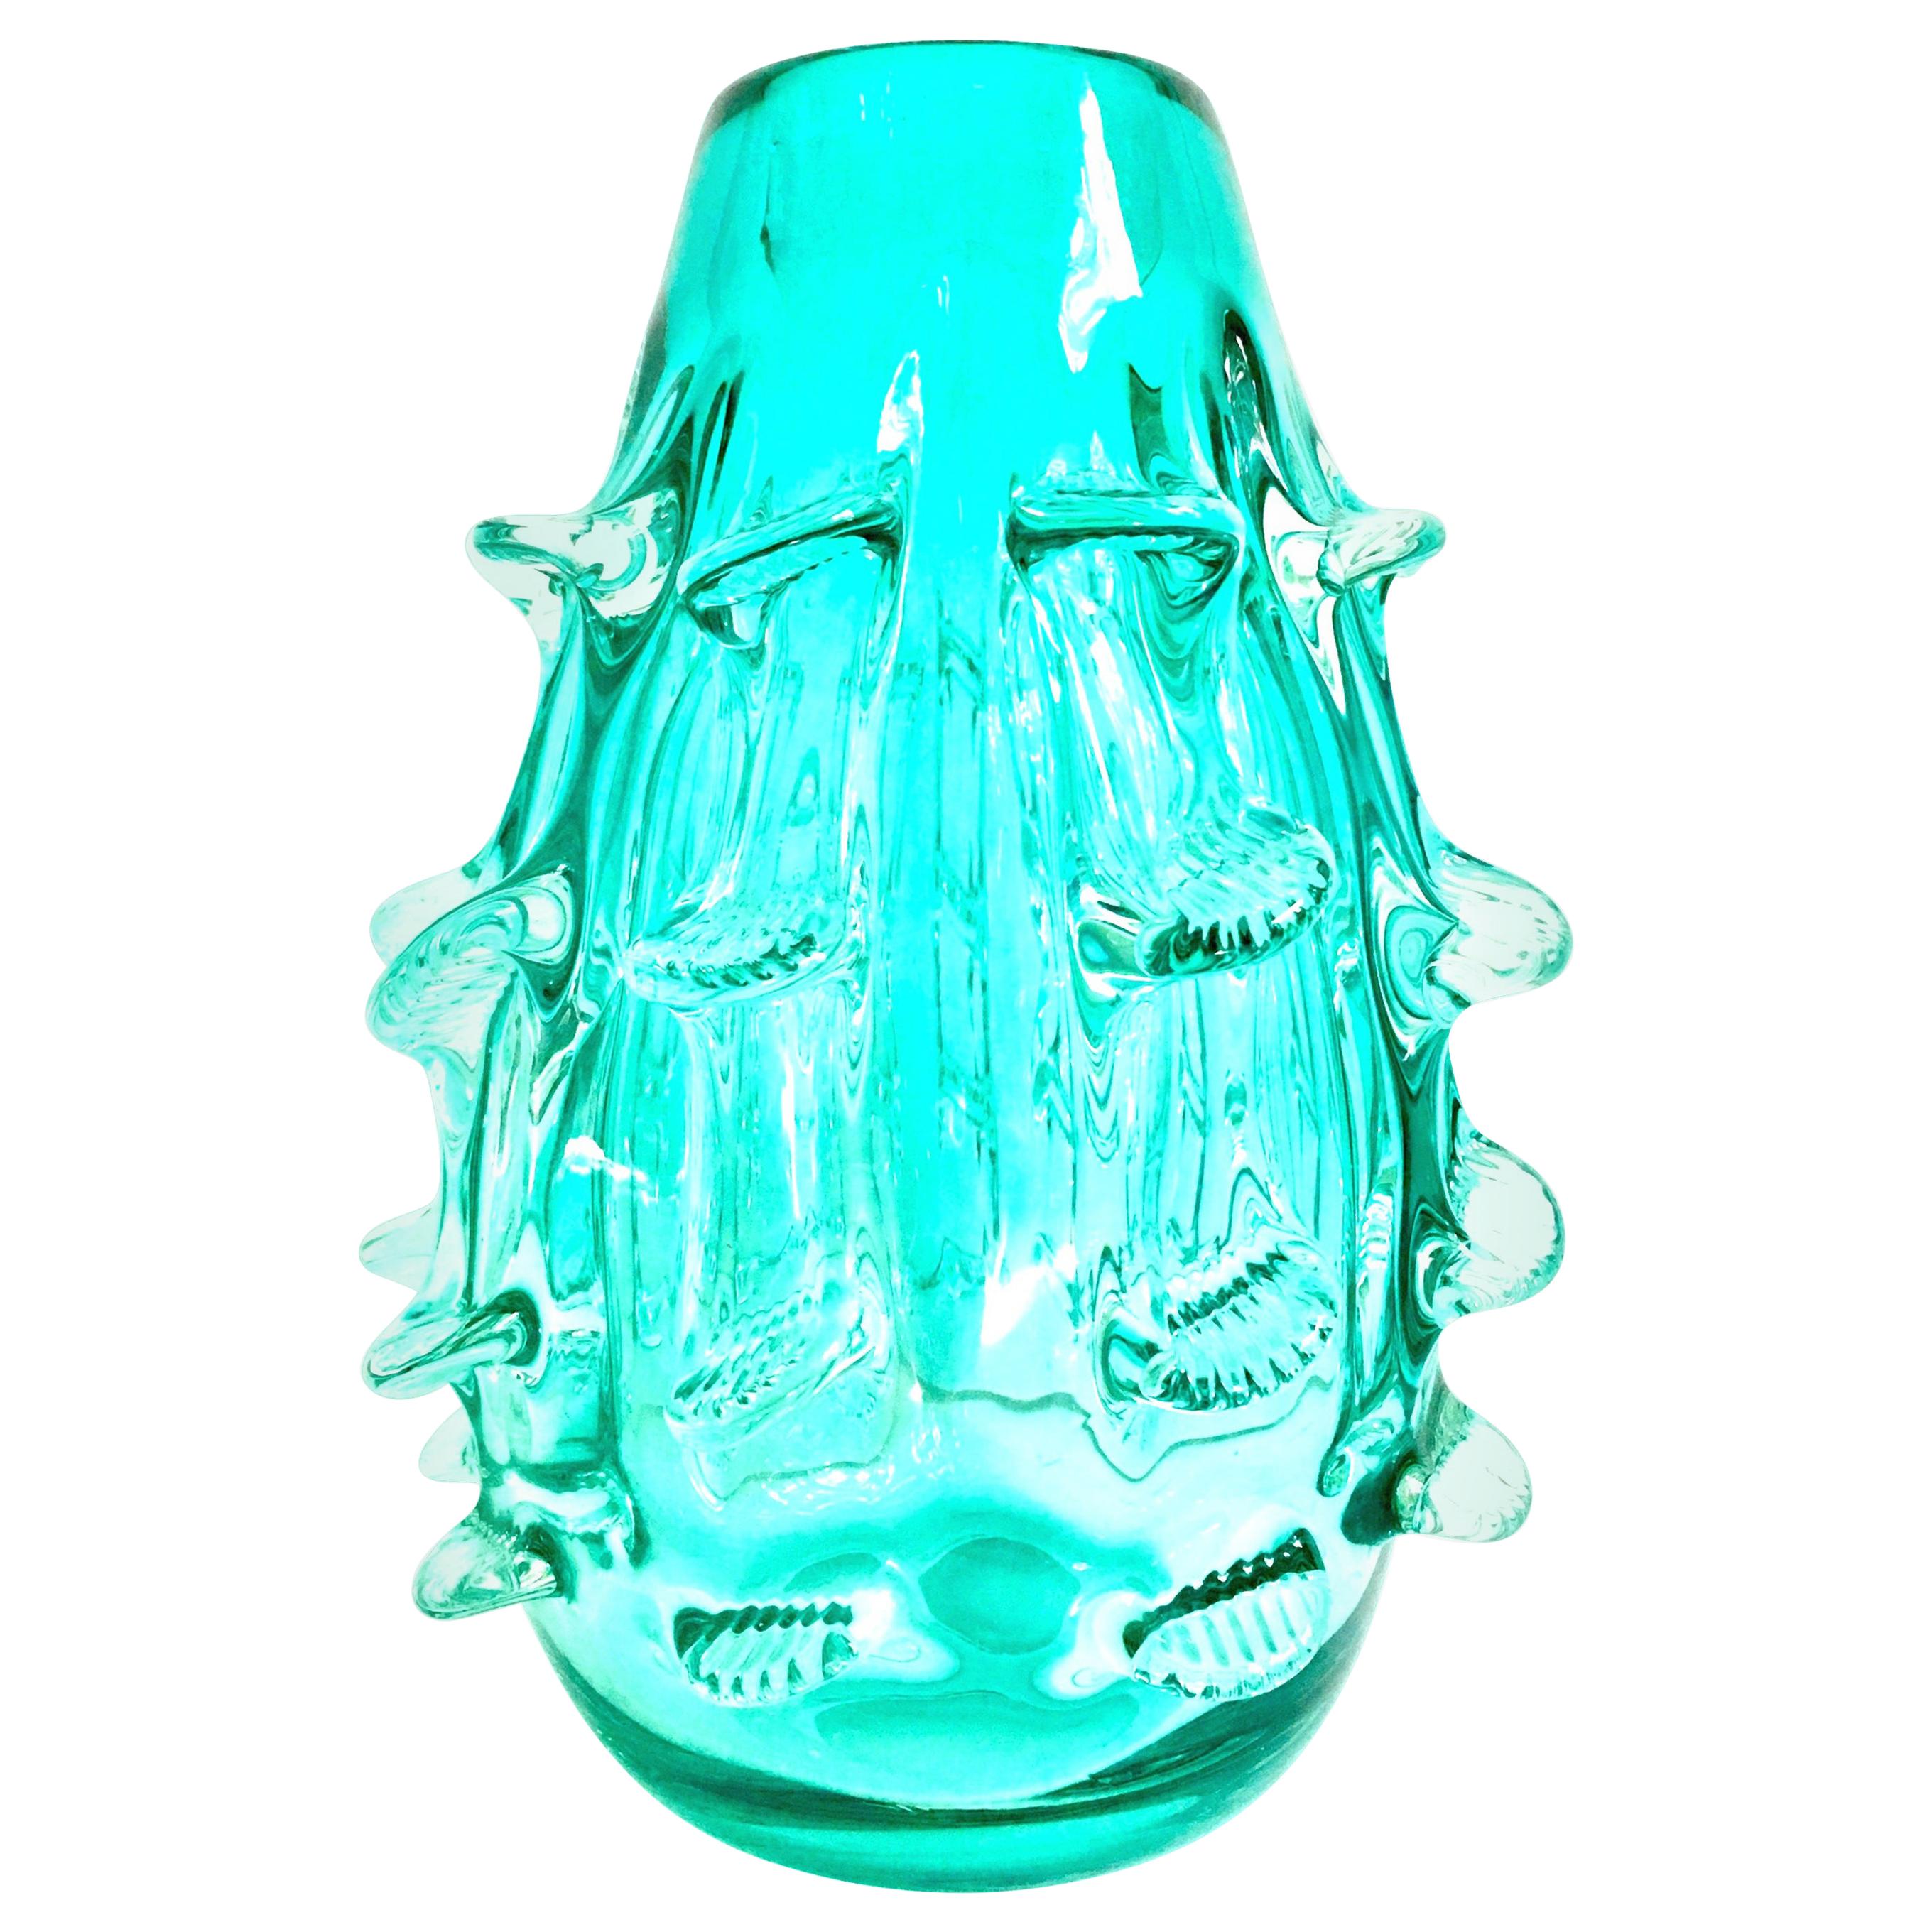 21st Century Modern Murano Style Art Glass "Sea Urchin" Vase For Sale